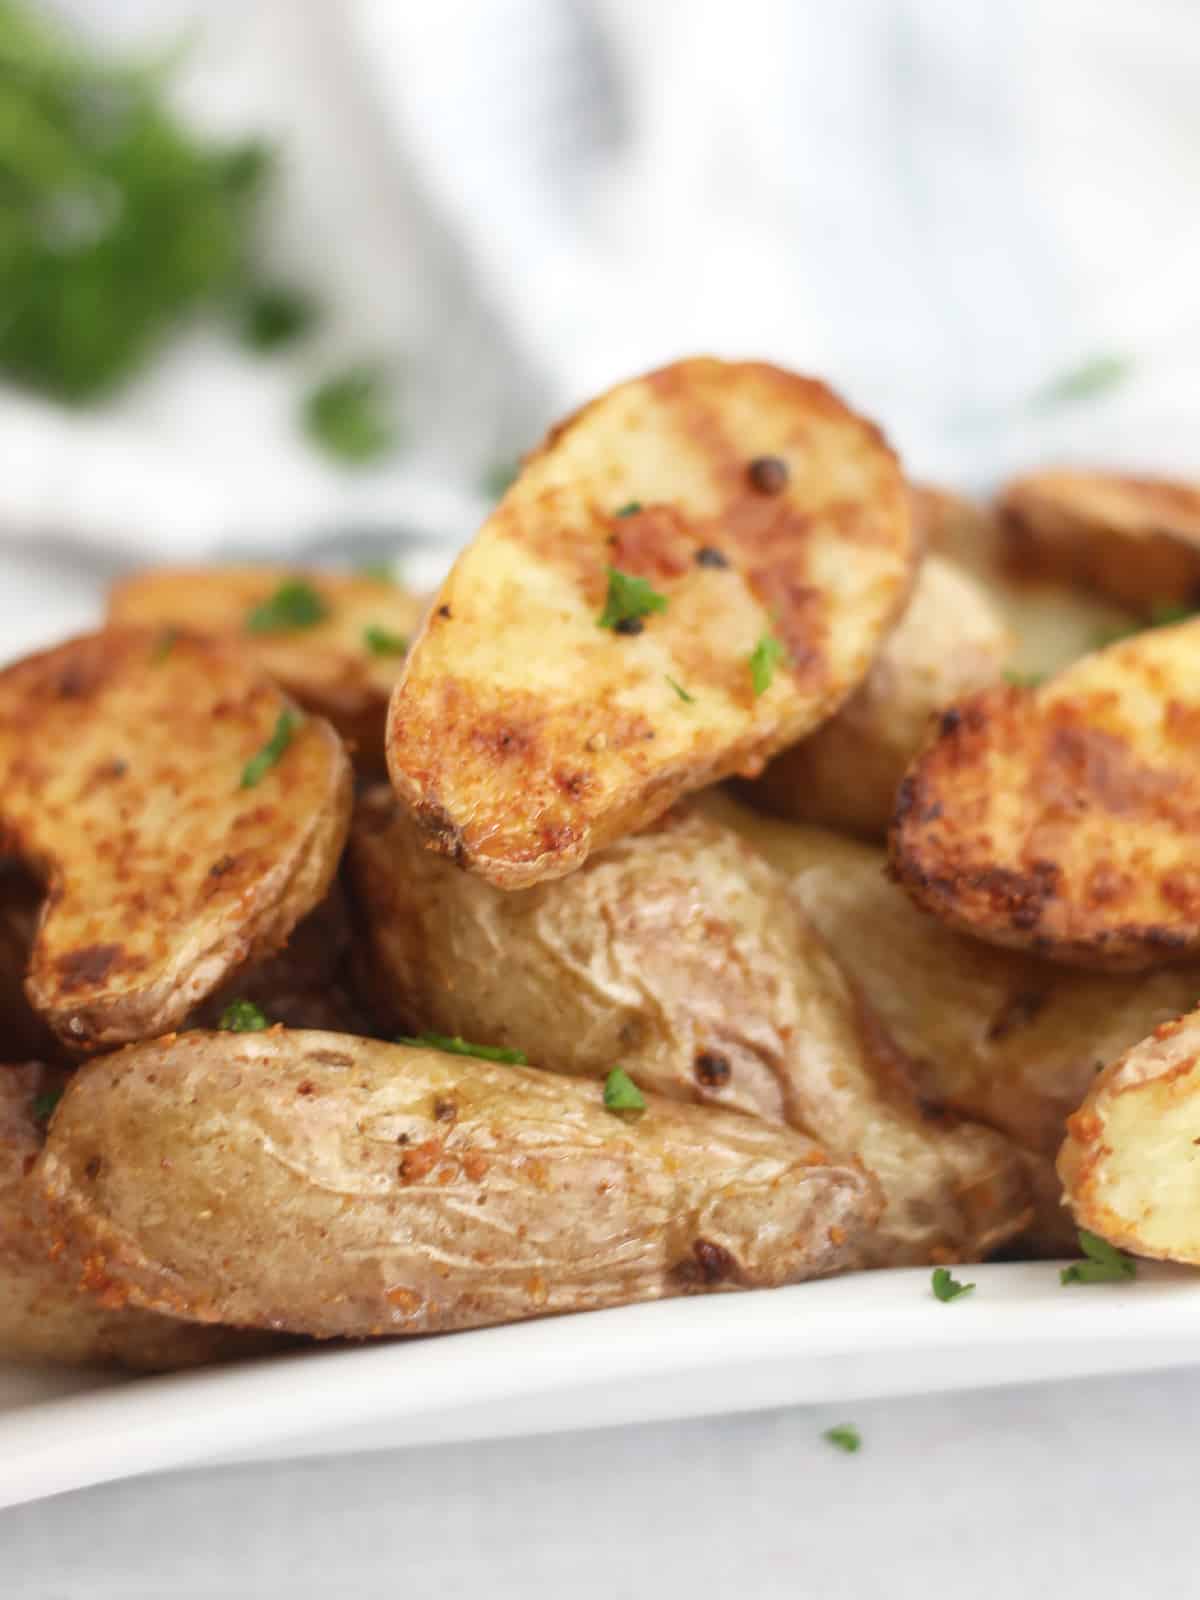 Parsley garnish on cooked potatoes.